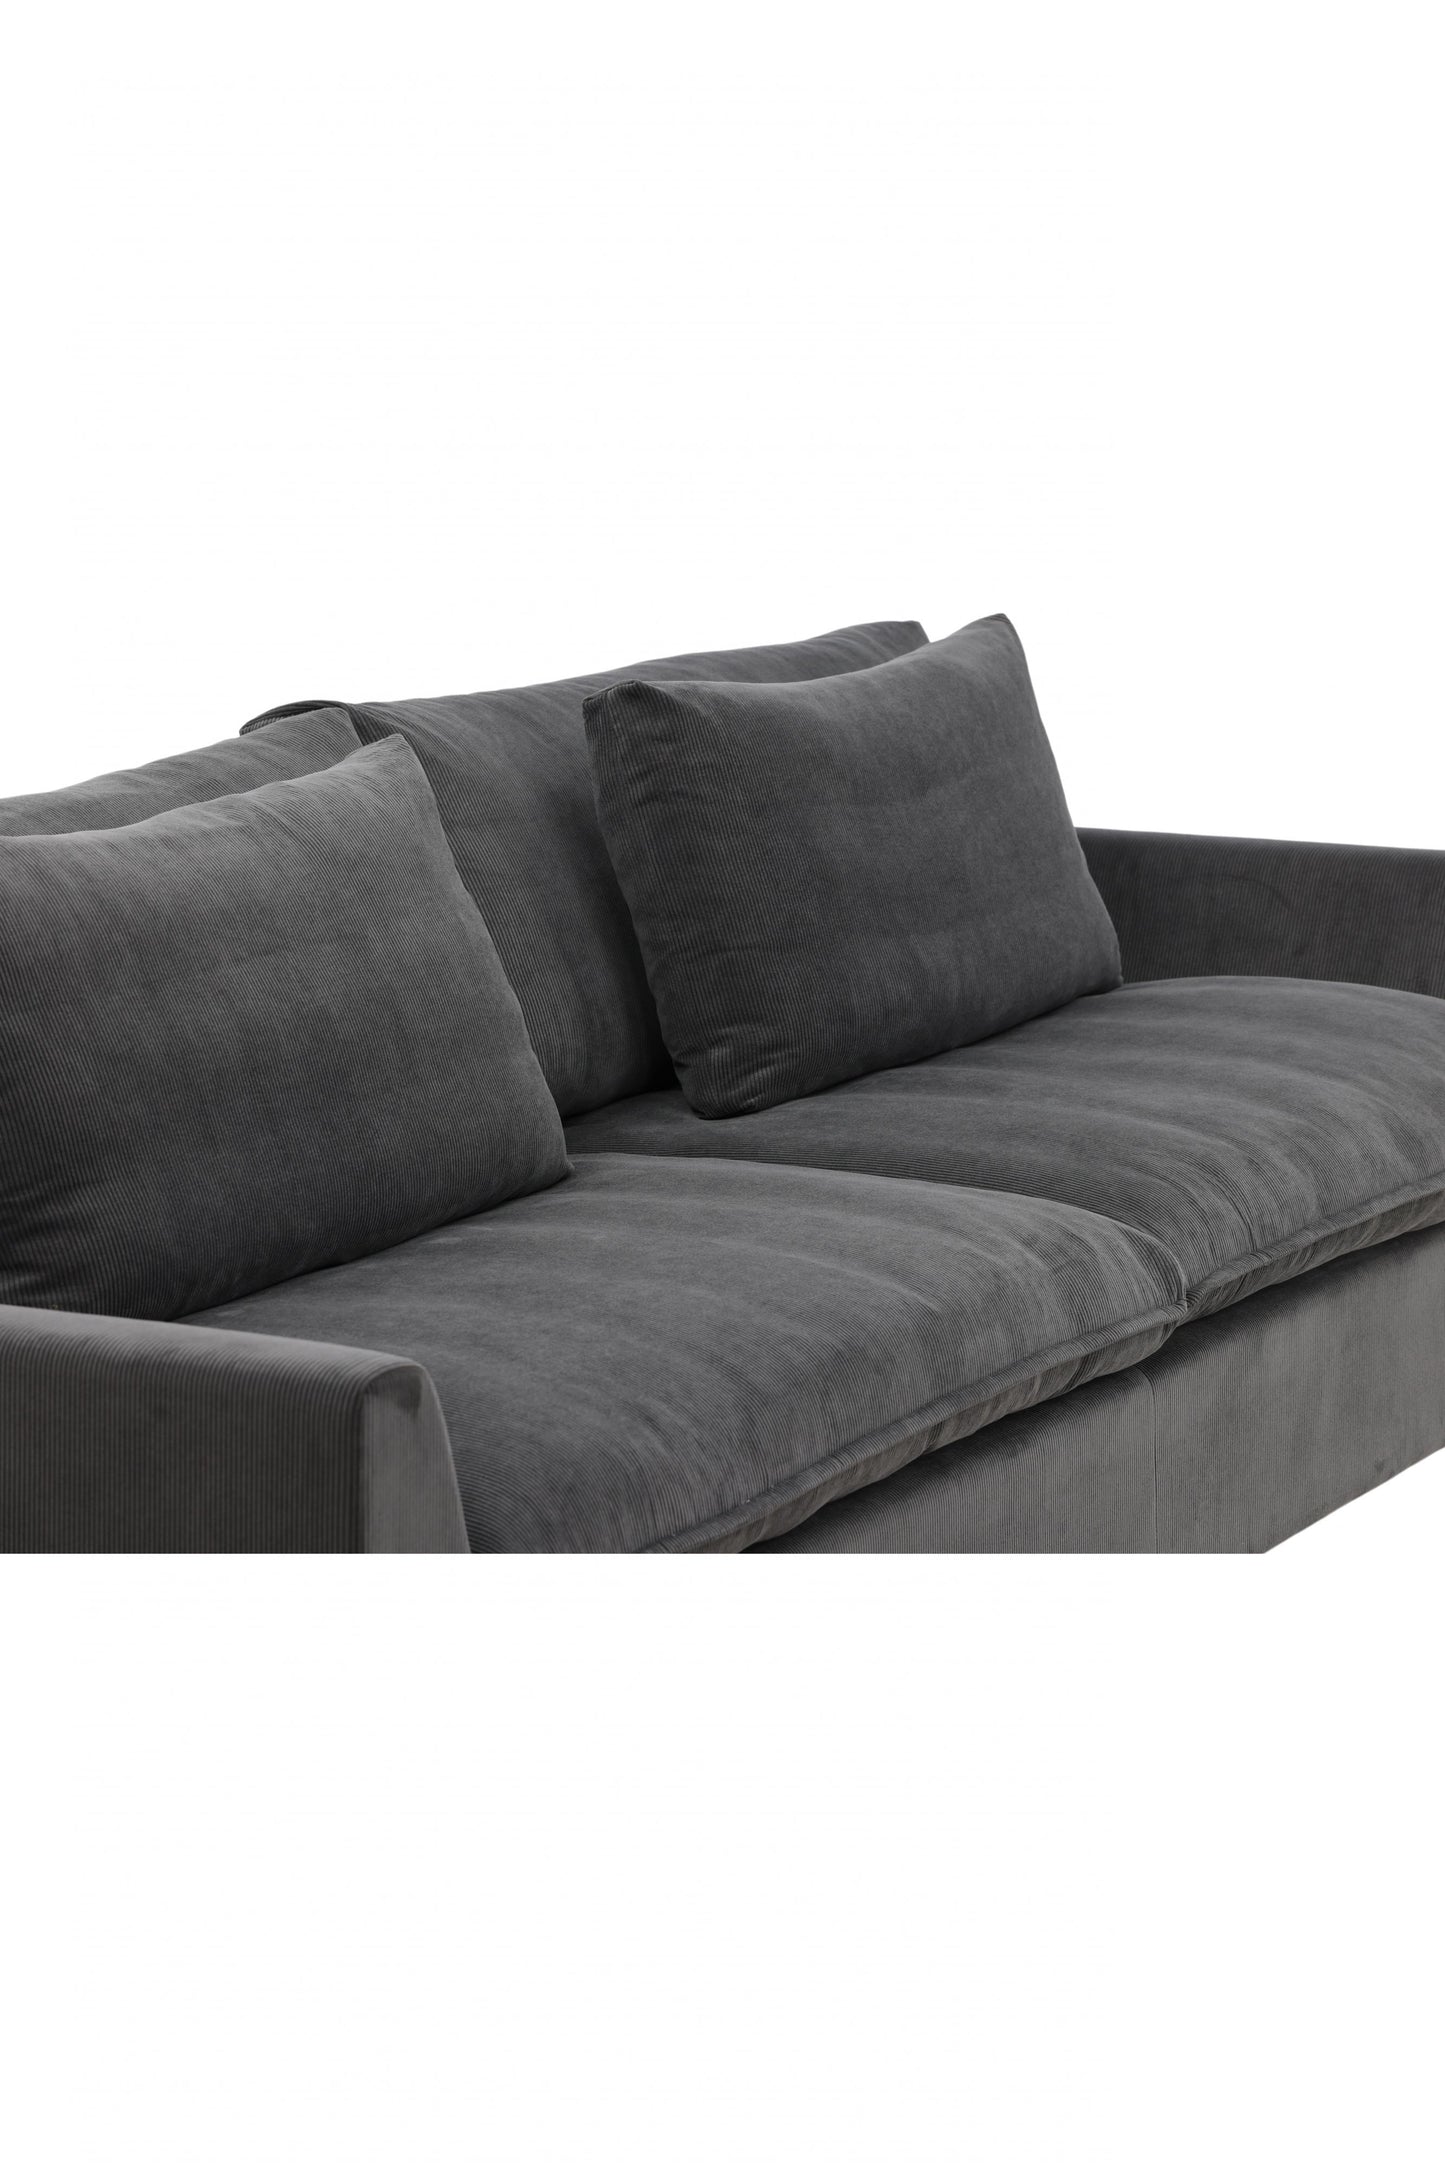 Venture-Design | Durham Sofa - Holz / Dunkelgrauer Cord